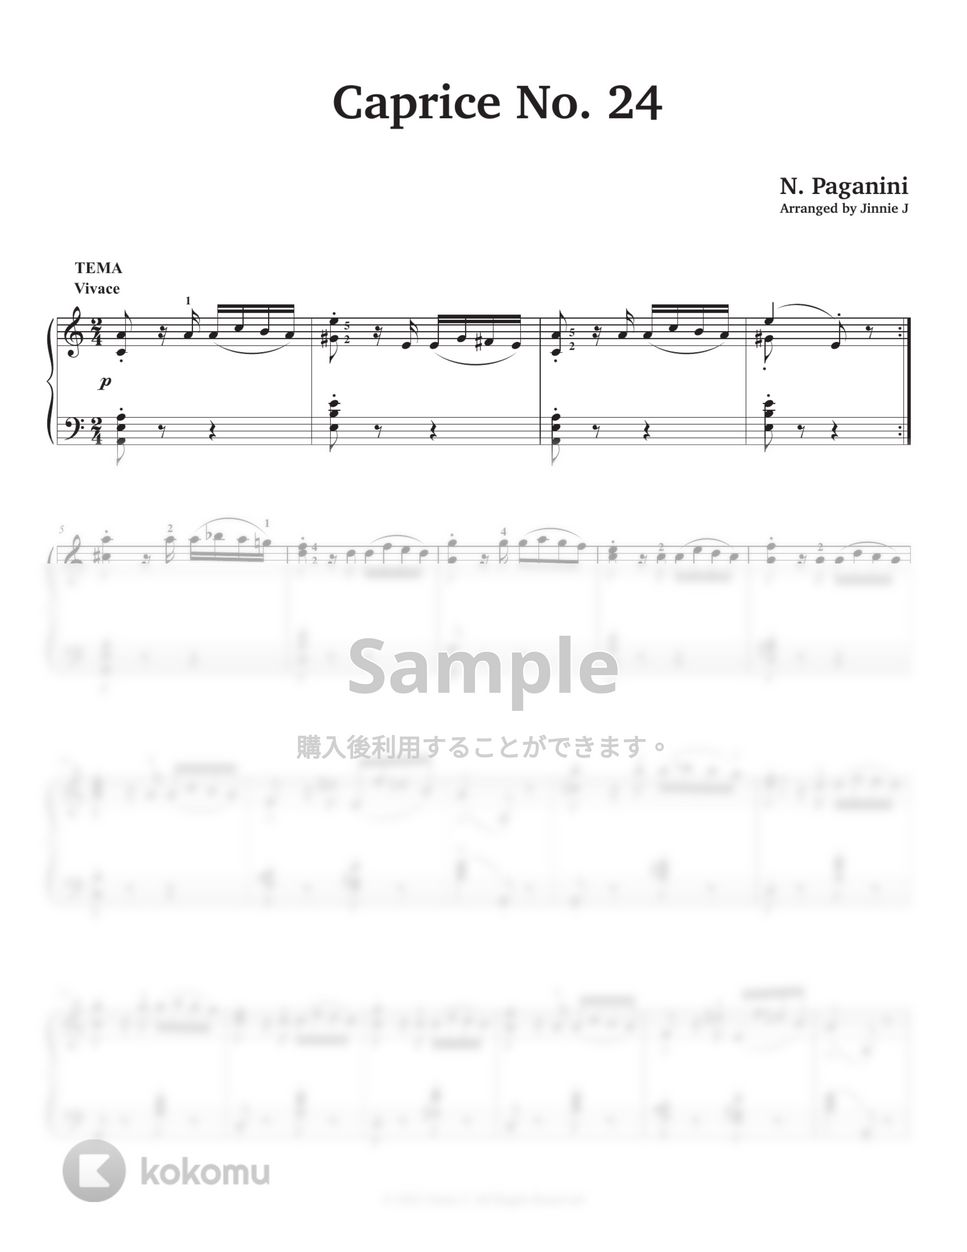 N. Paganini - Caprice No. 24 by Jinnie J